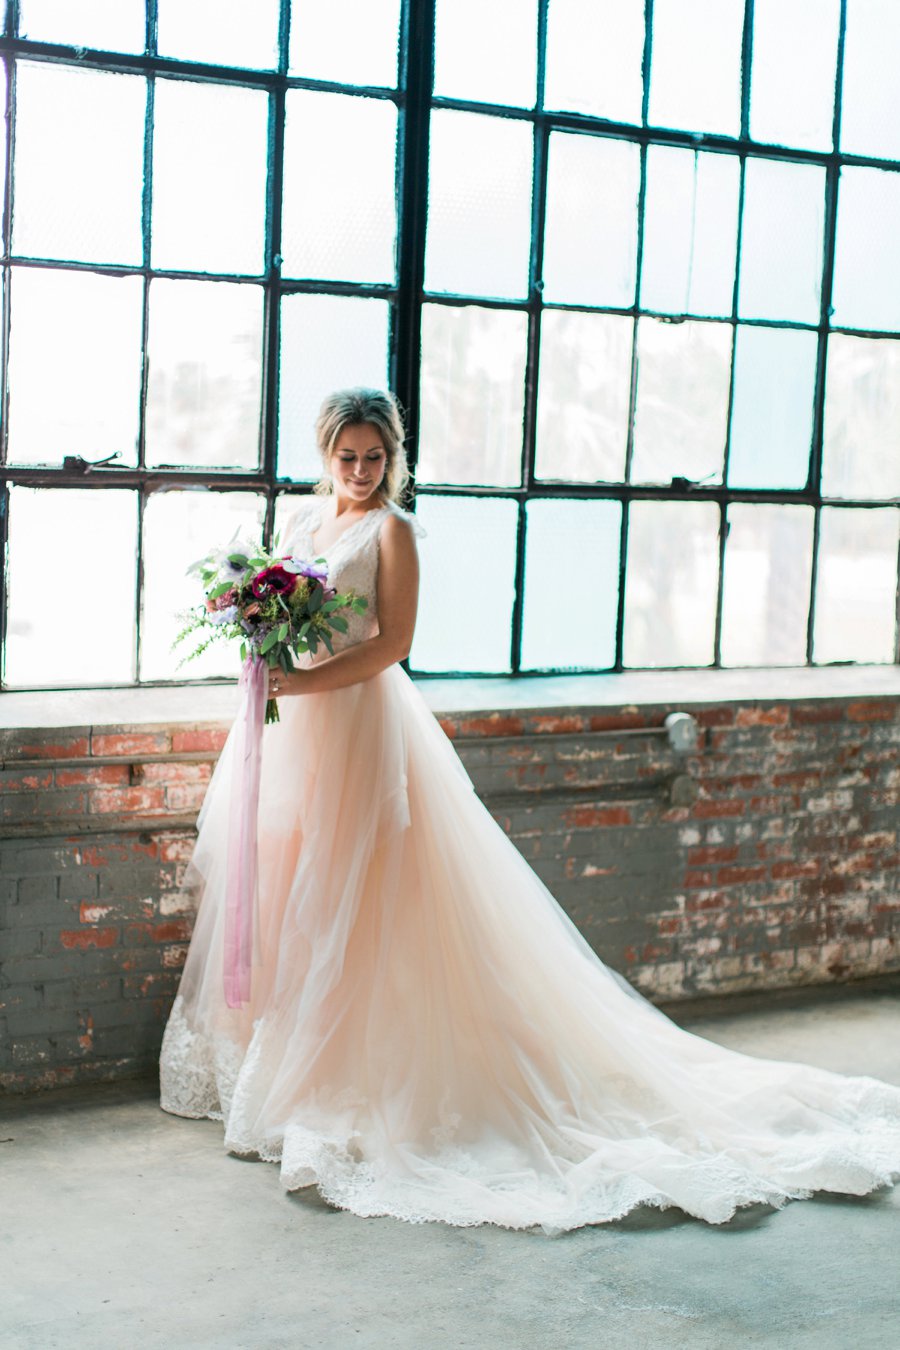 Lavender & Burgundy Love Inspired Industrial Wedding Ideas via TheELD.com